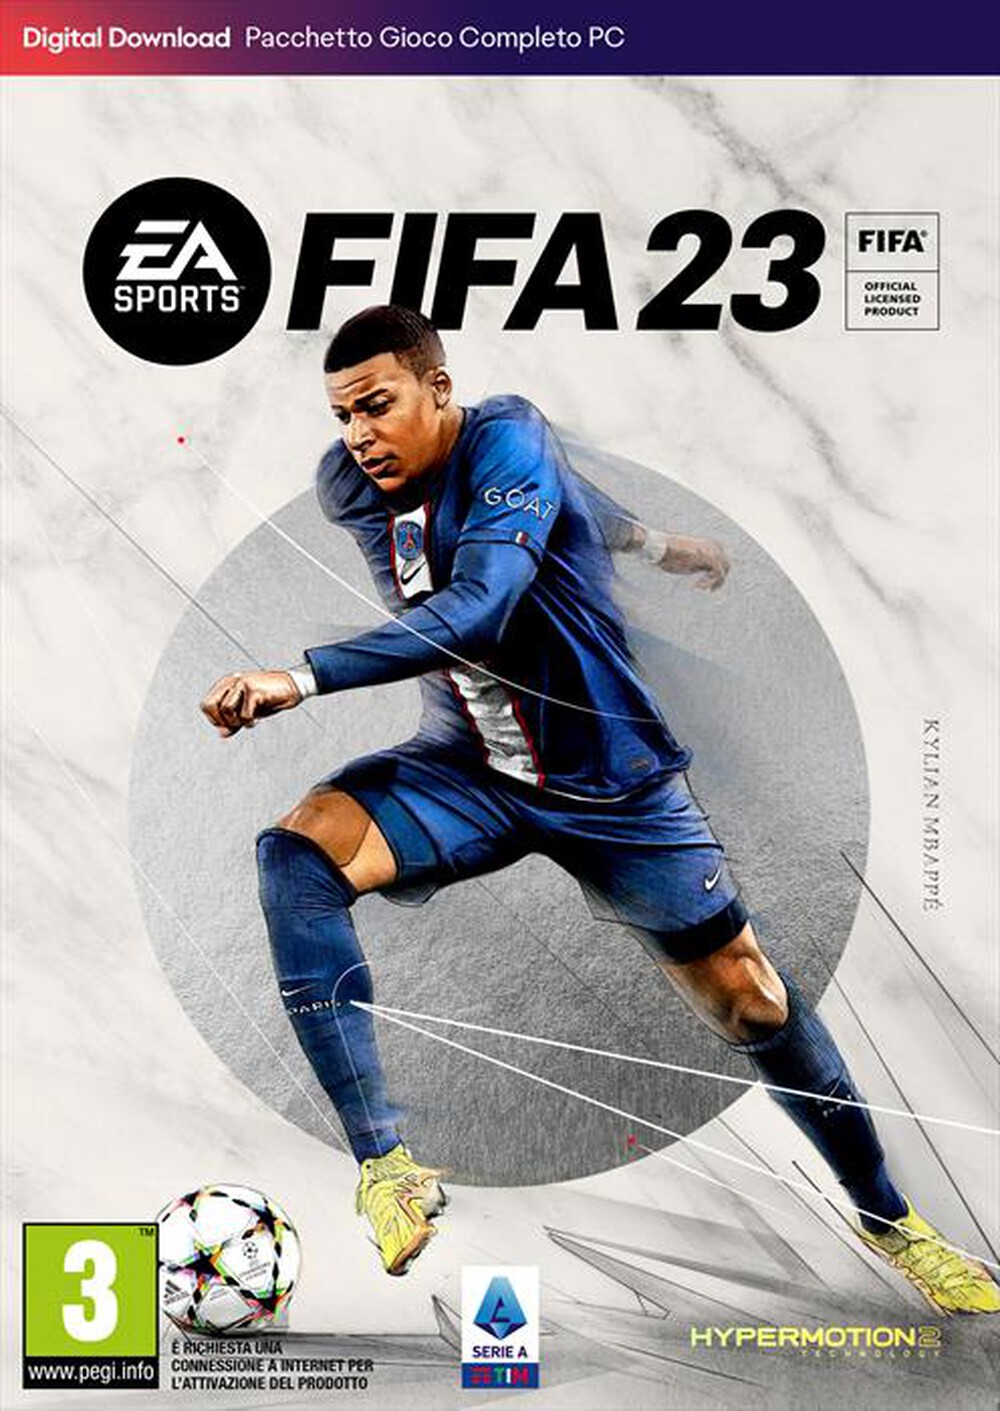 "ELECTRONIC ARTS - FIFA 23 PC"